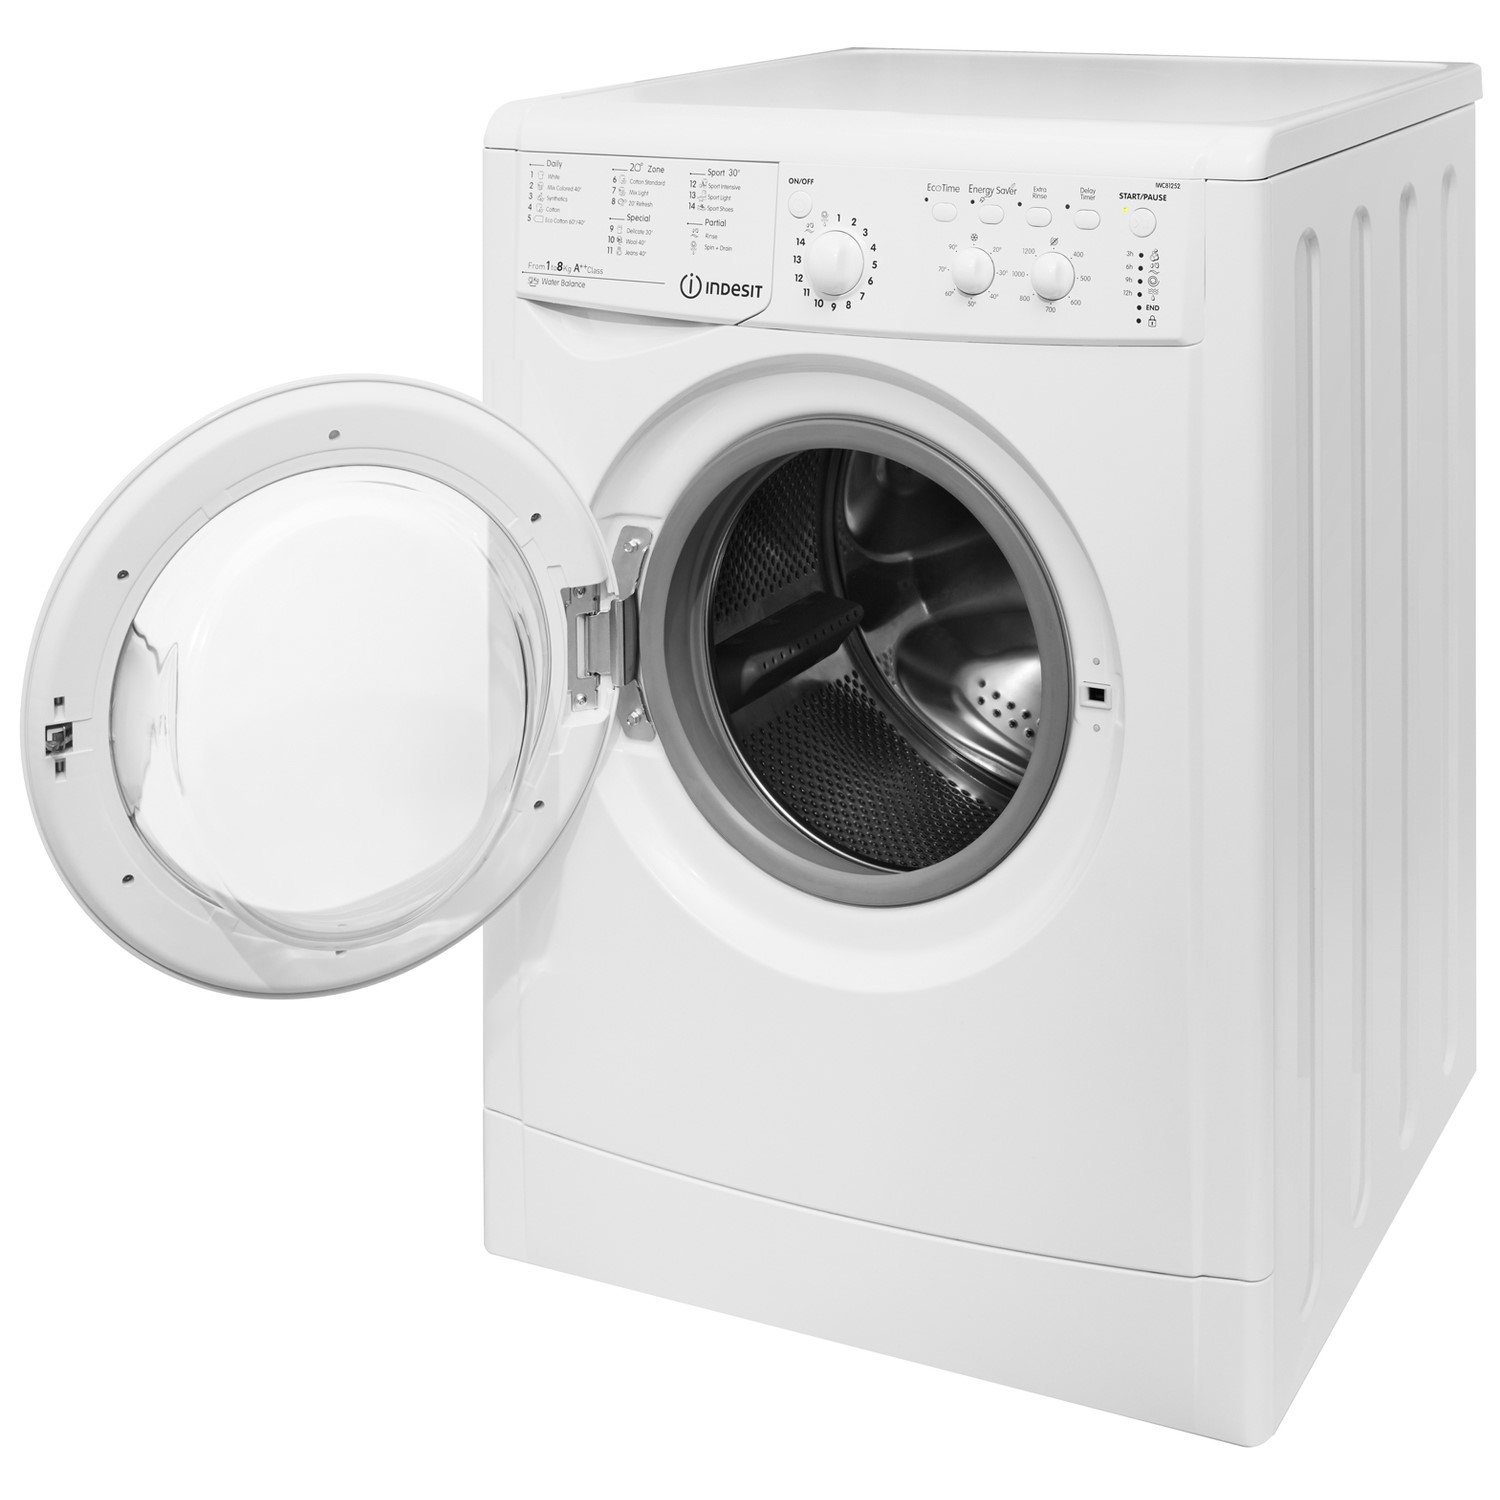 GRADE A2 - Indesit 8kg 1200rpm Freestanding Washing Machine - White | Appliances Direct